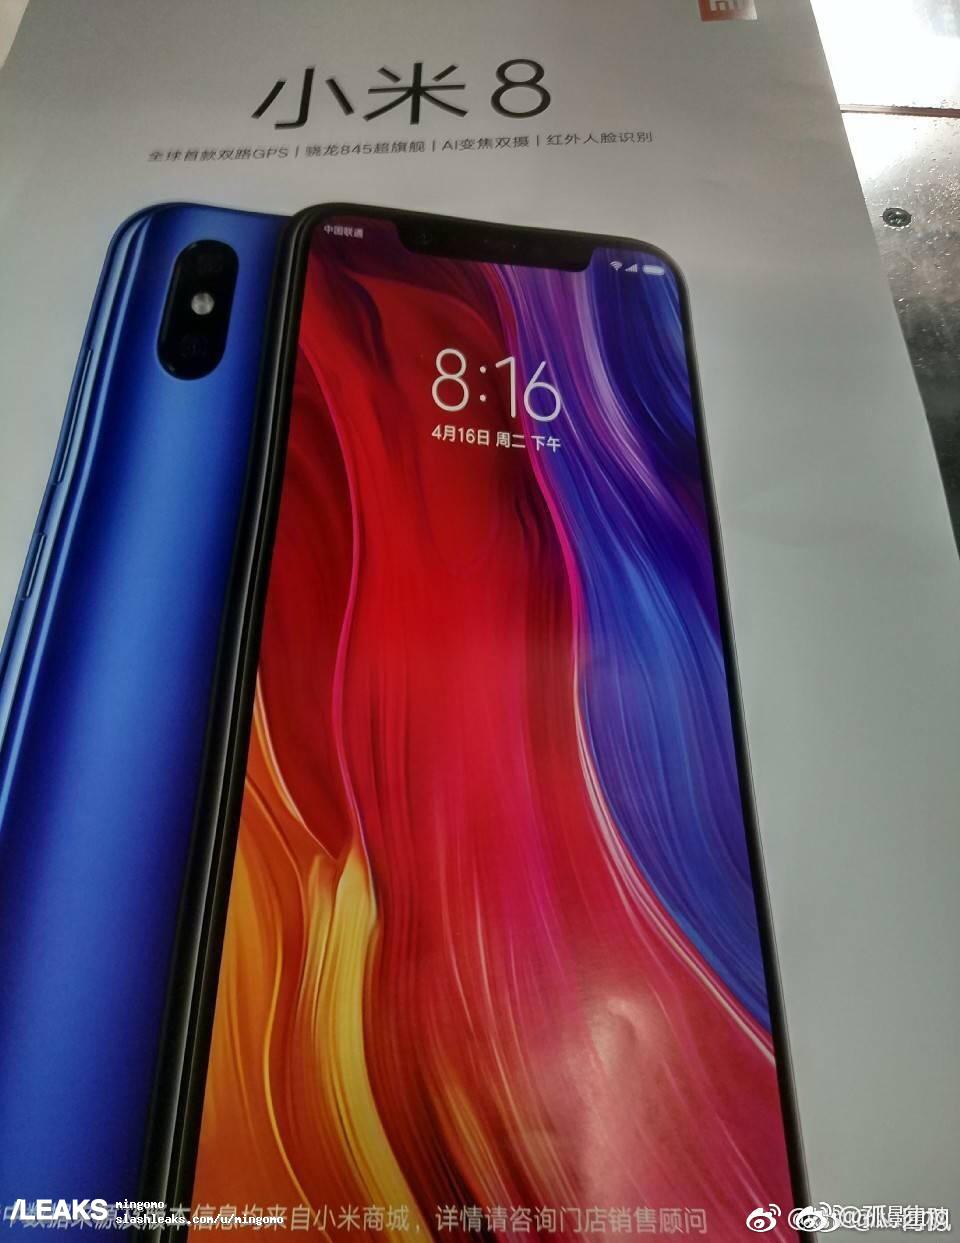 Xiaomi Mi 8 poster